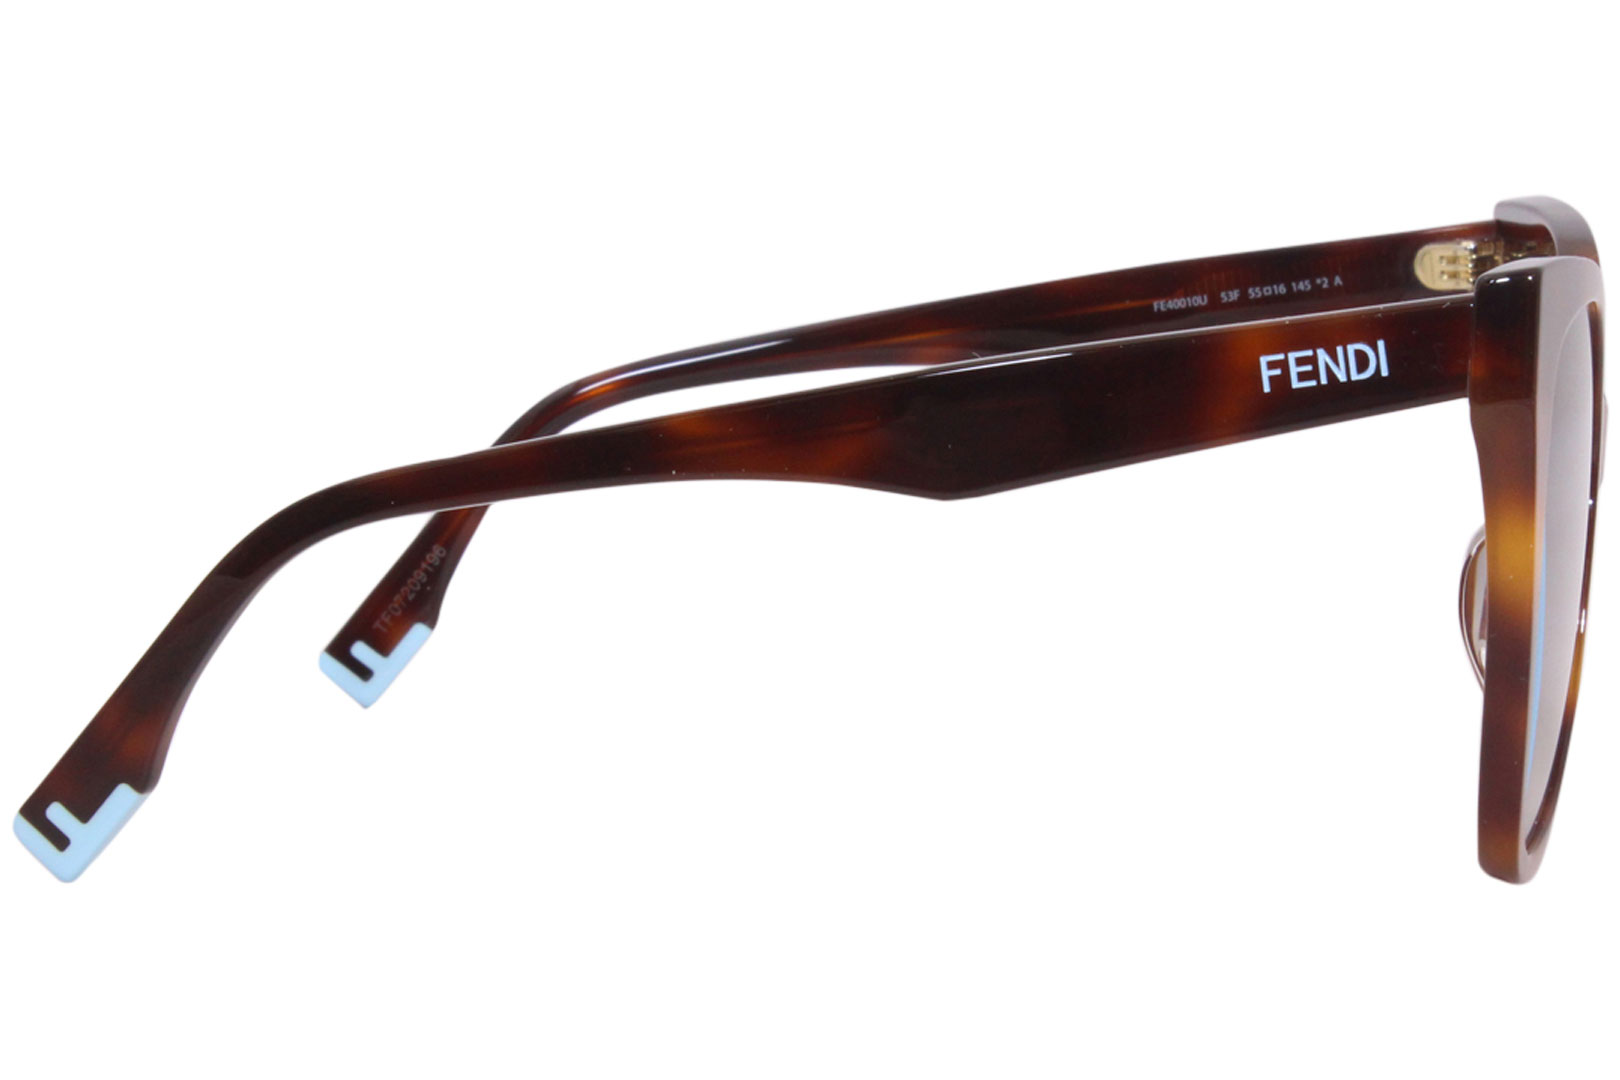 Fendi Fendigraphy Rectangular Sunglasses, 52mm - Havana/Brown Solid